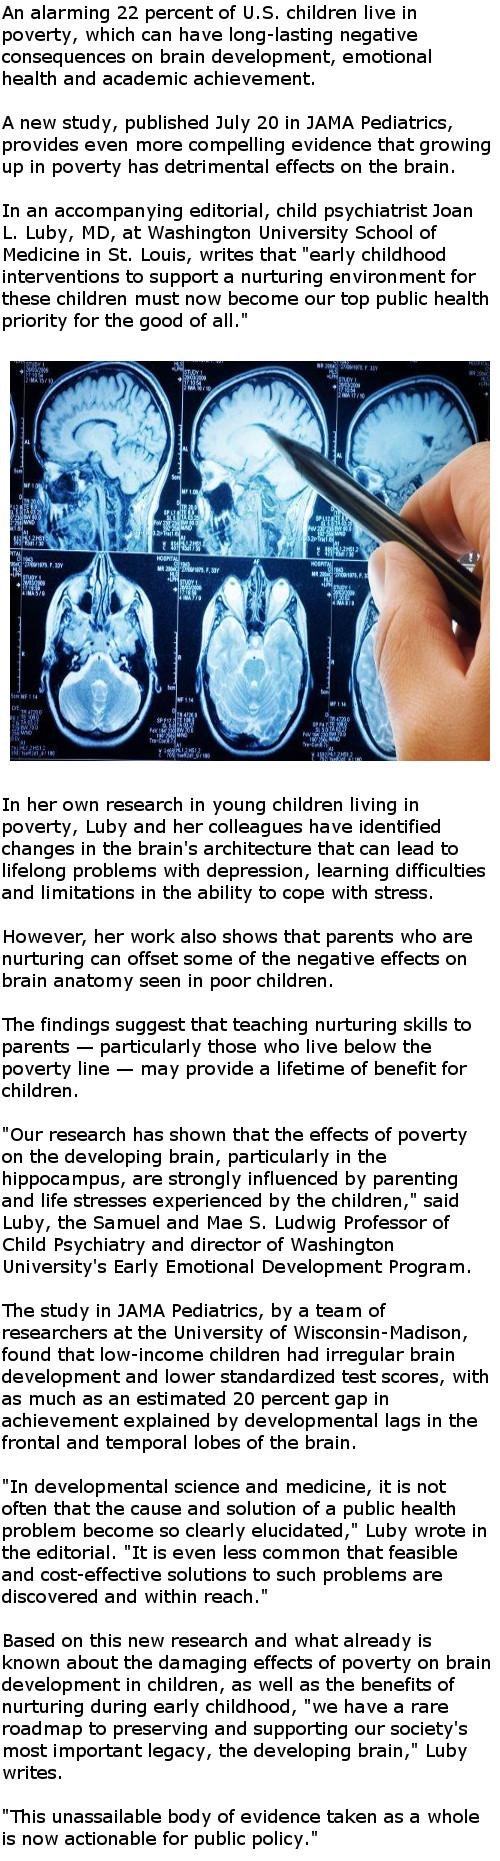 Poverty has detrimental effects on child's brain development